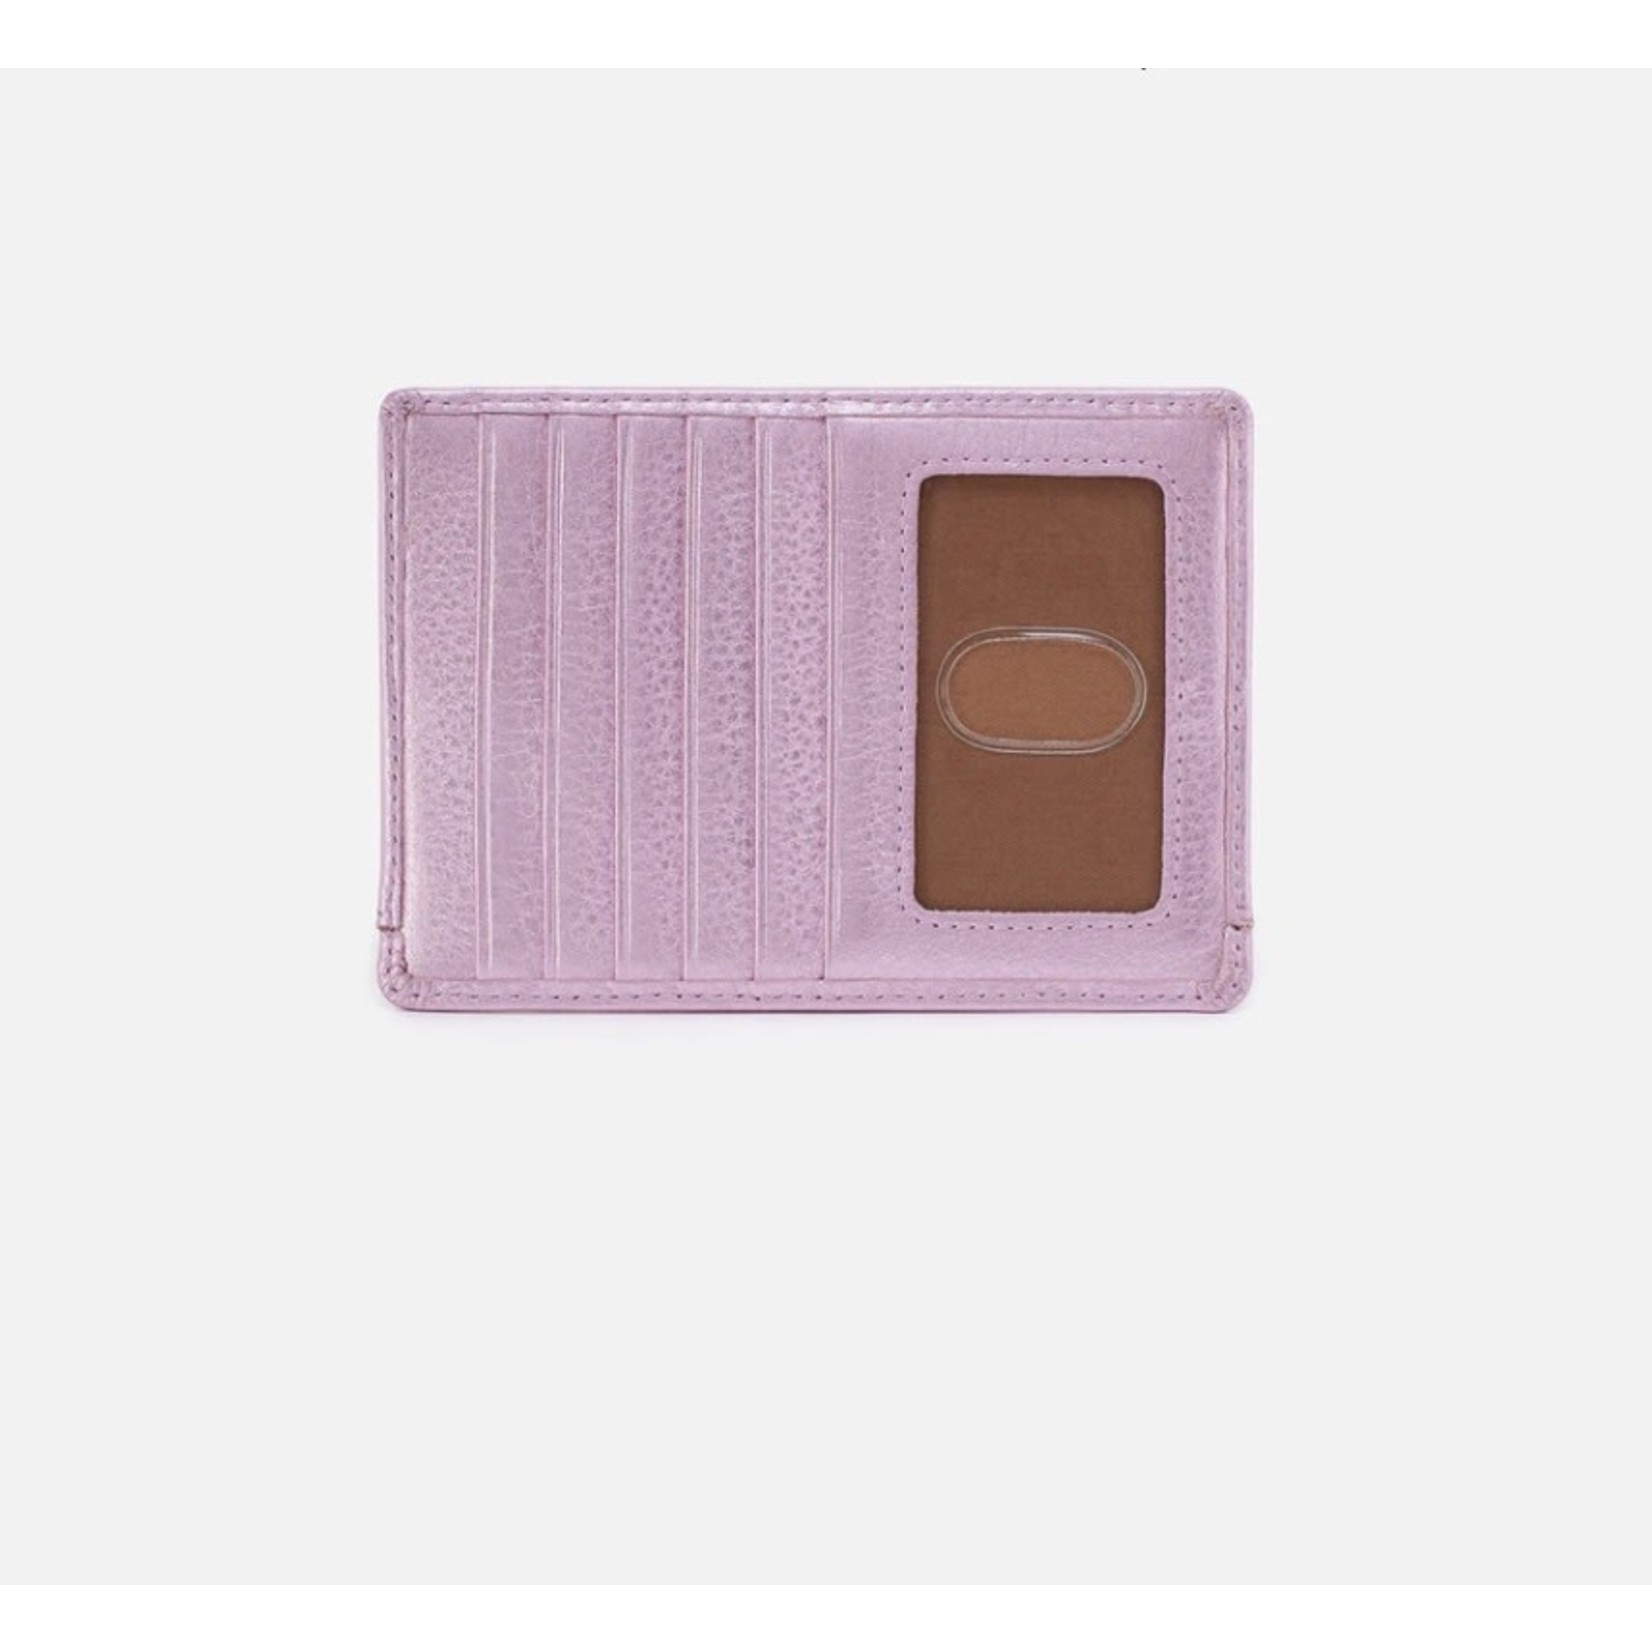 HOBO Euro Slide Metallic Leather Card Holder in Pink